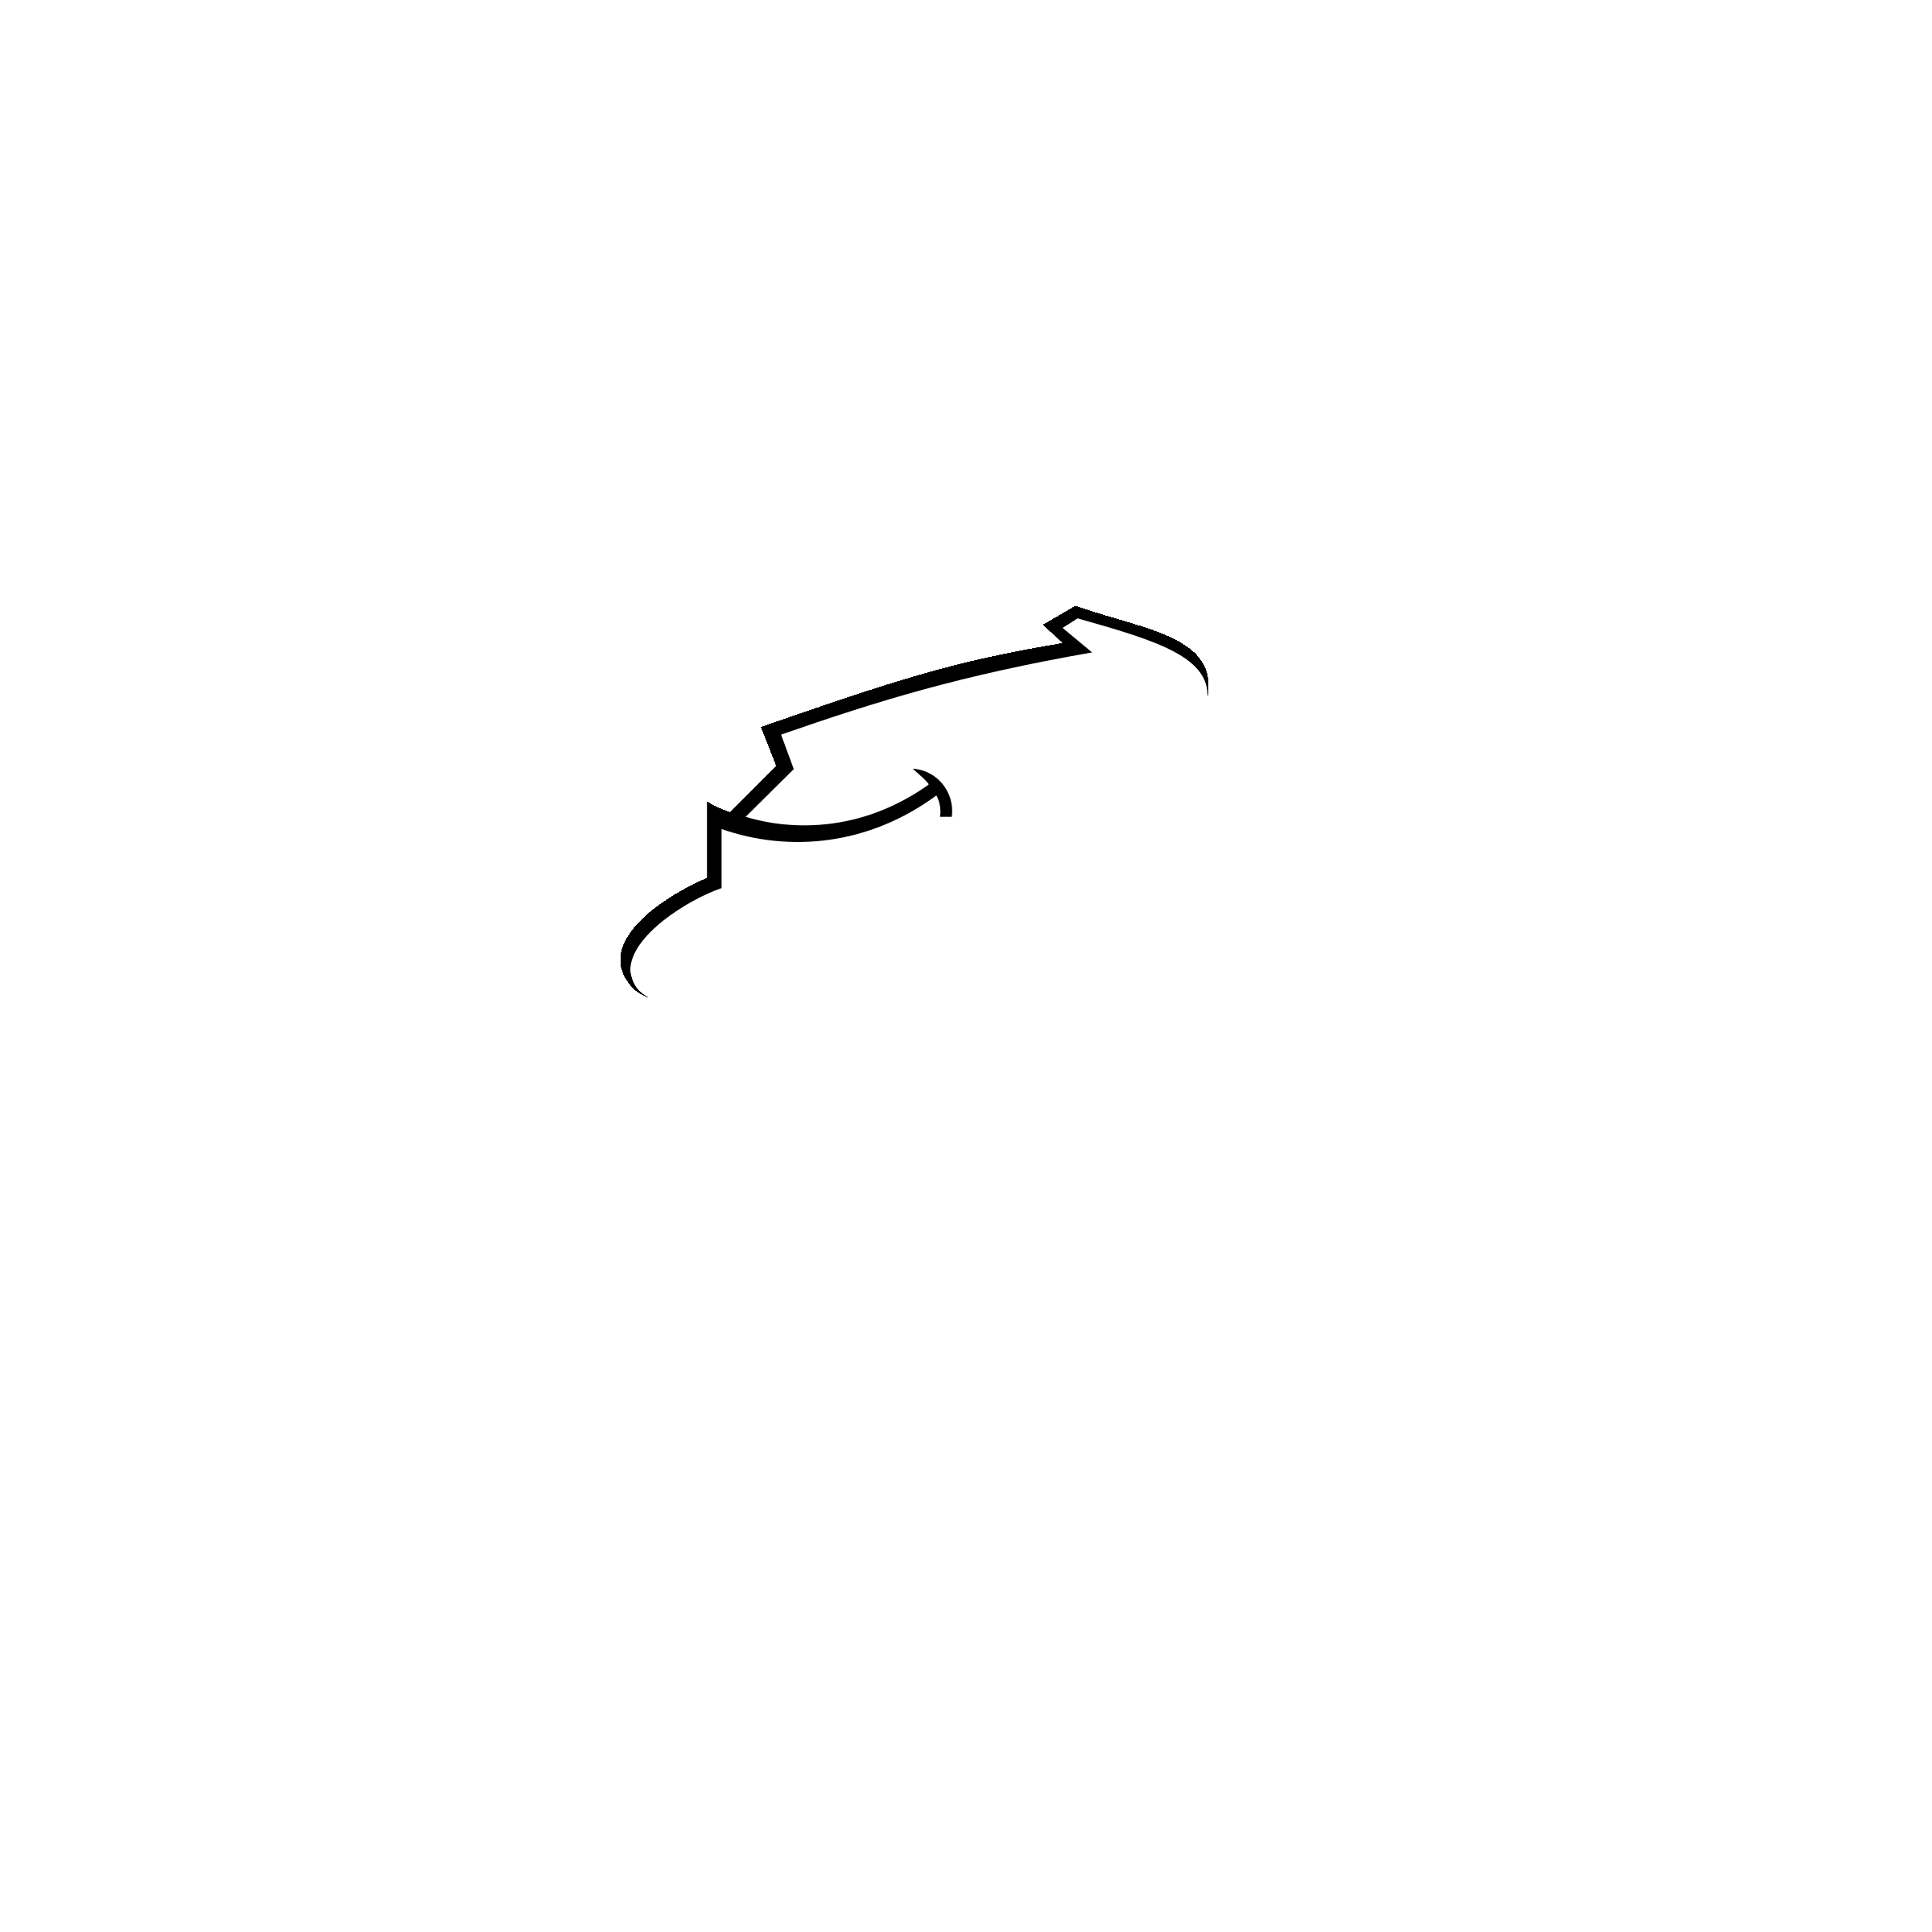 Alibaba Logo - Alibaba com Logo PNG Transparent & SVG Vector - Freebie Supply